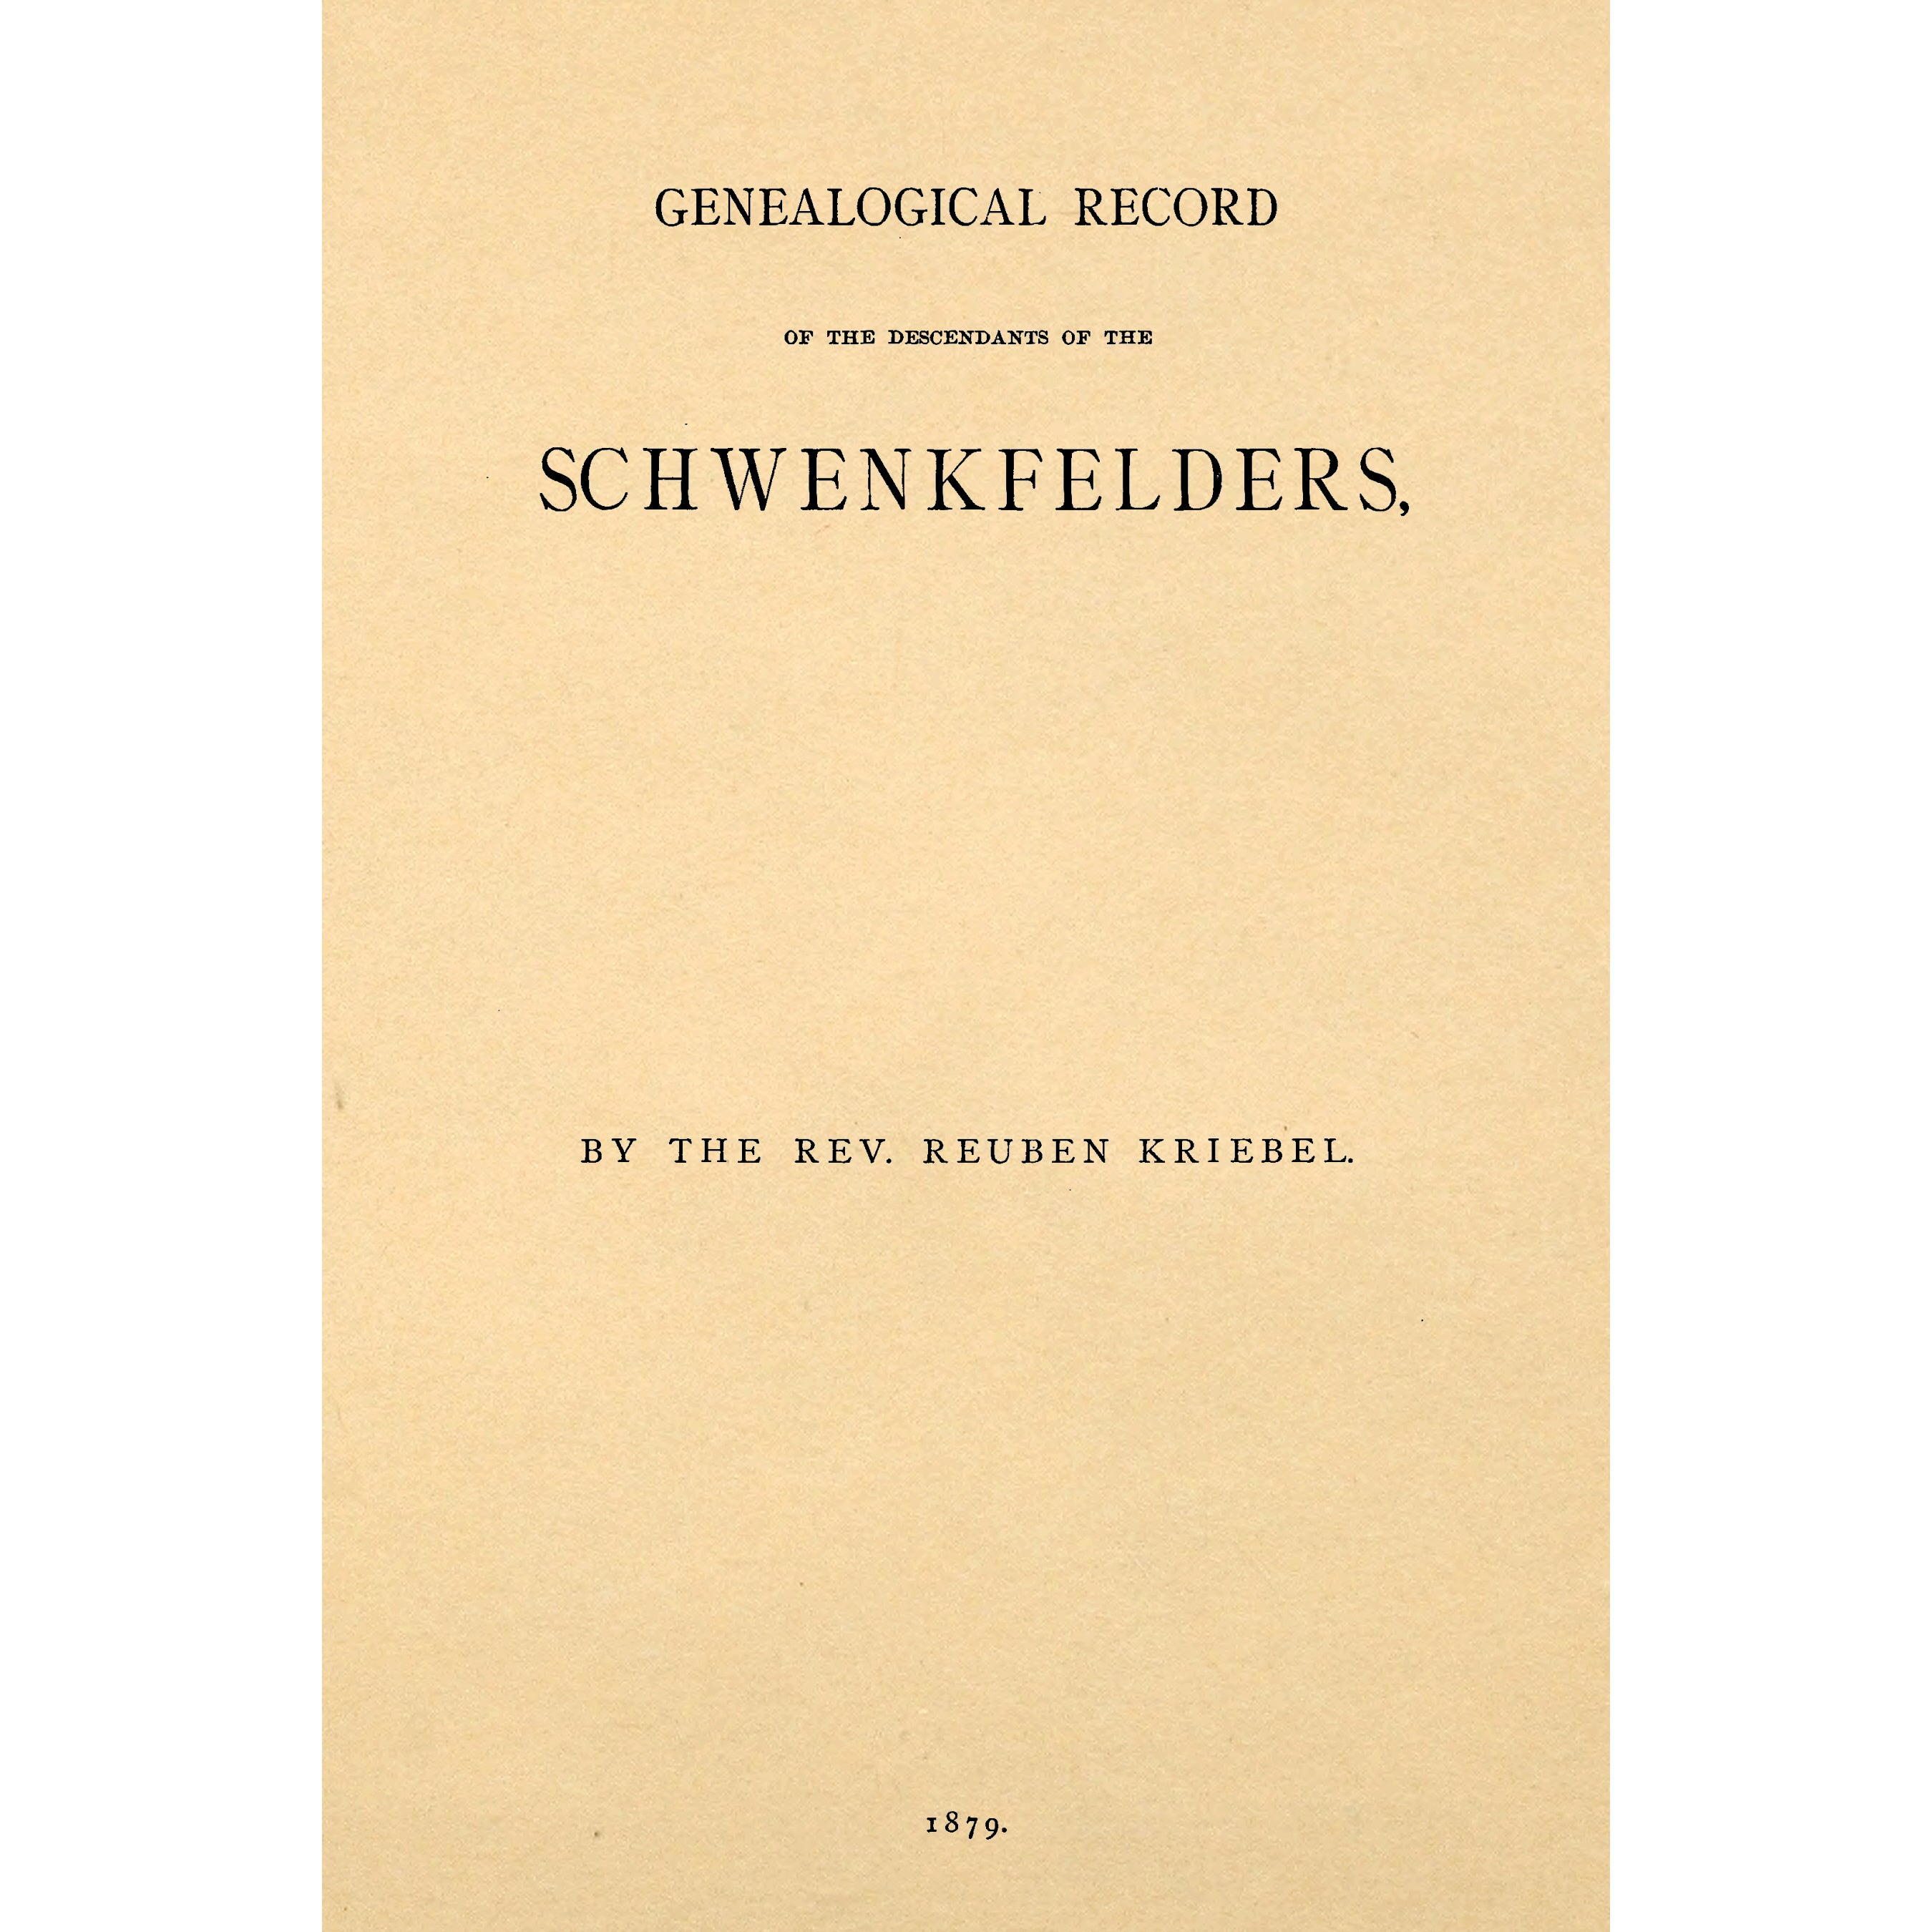 A Genealoical Record of the Descendants of th Schwenkfelders,